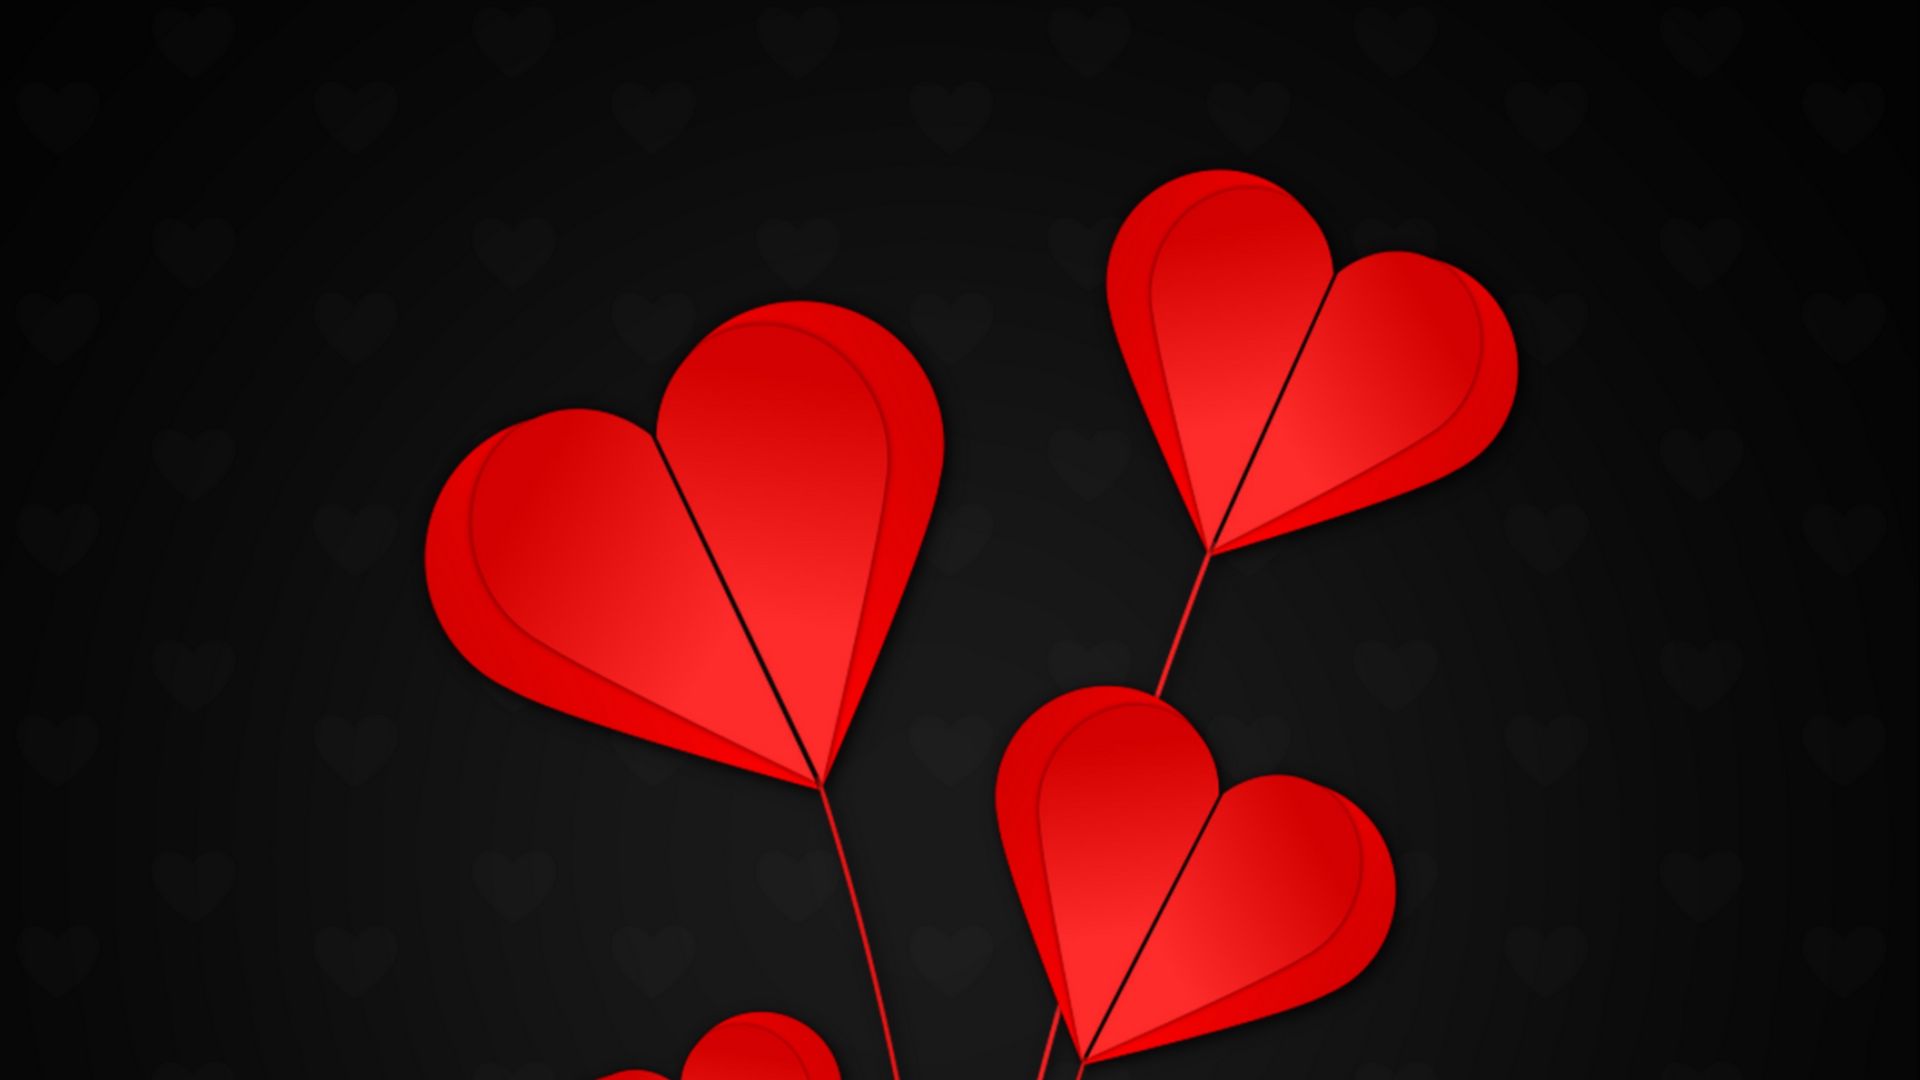 Wallpaper Hearts, Red, Black Background - Black Love Hd Wallpapers 1080p , HD Wallpaper & Backgrounds